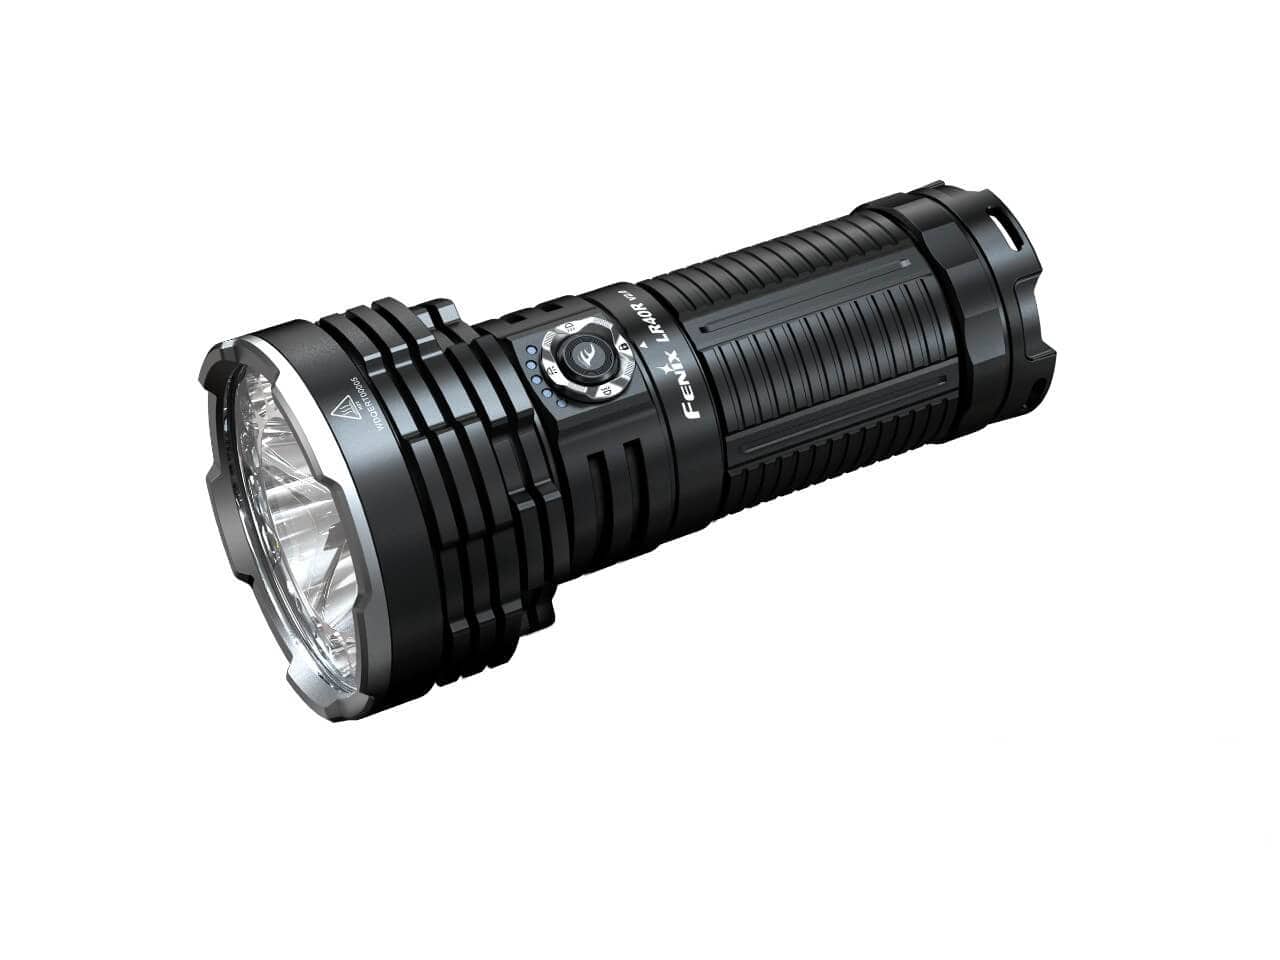 Fenix LR40R V2.0 Rechargeable LED Searchlight